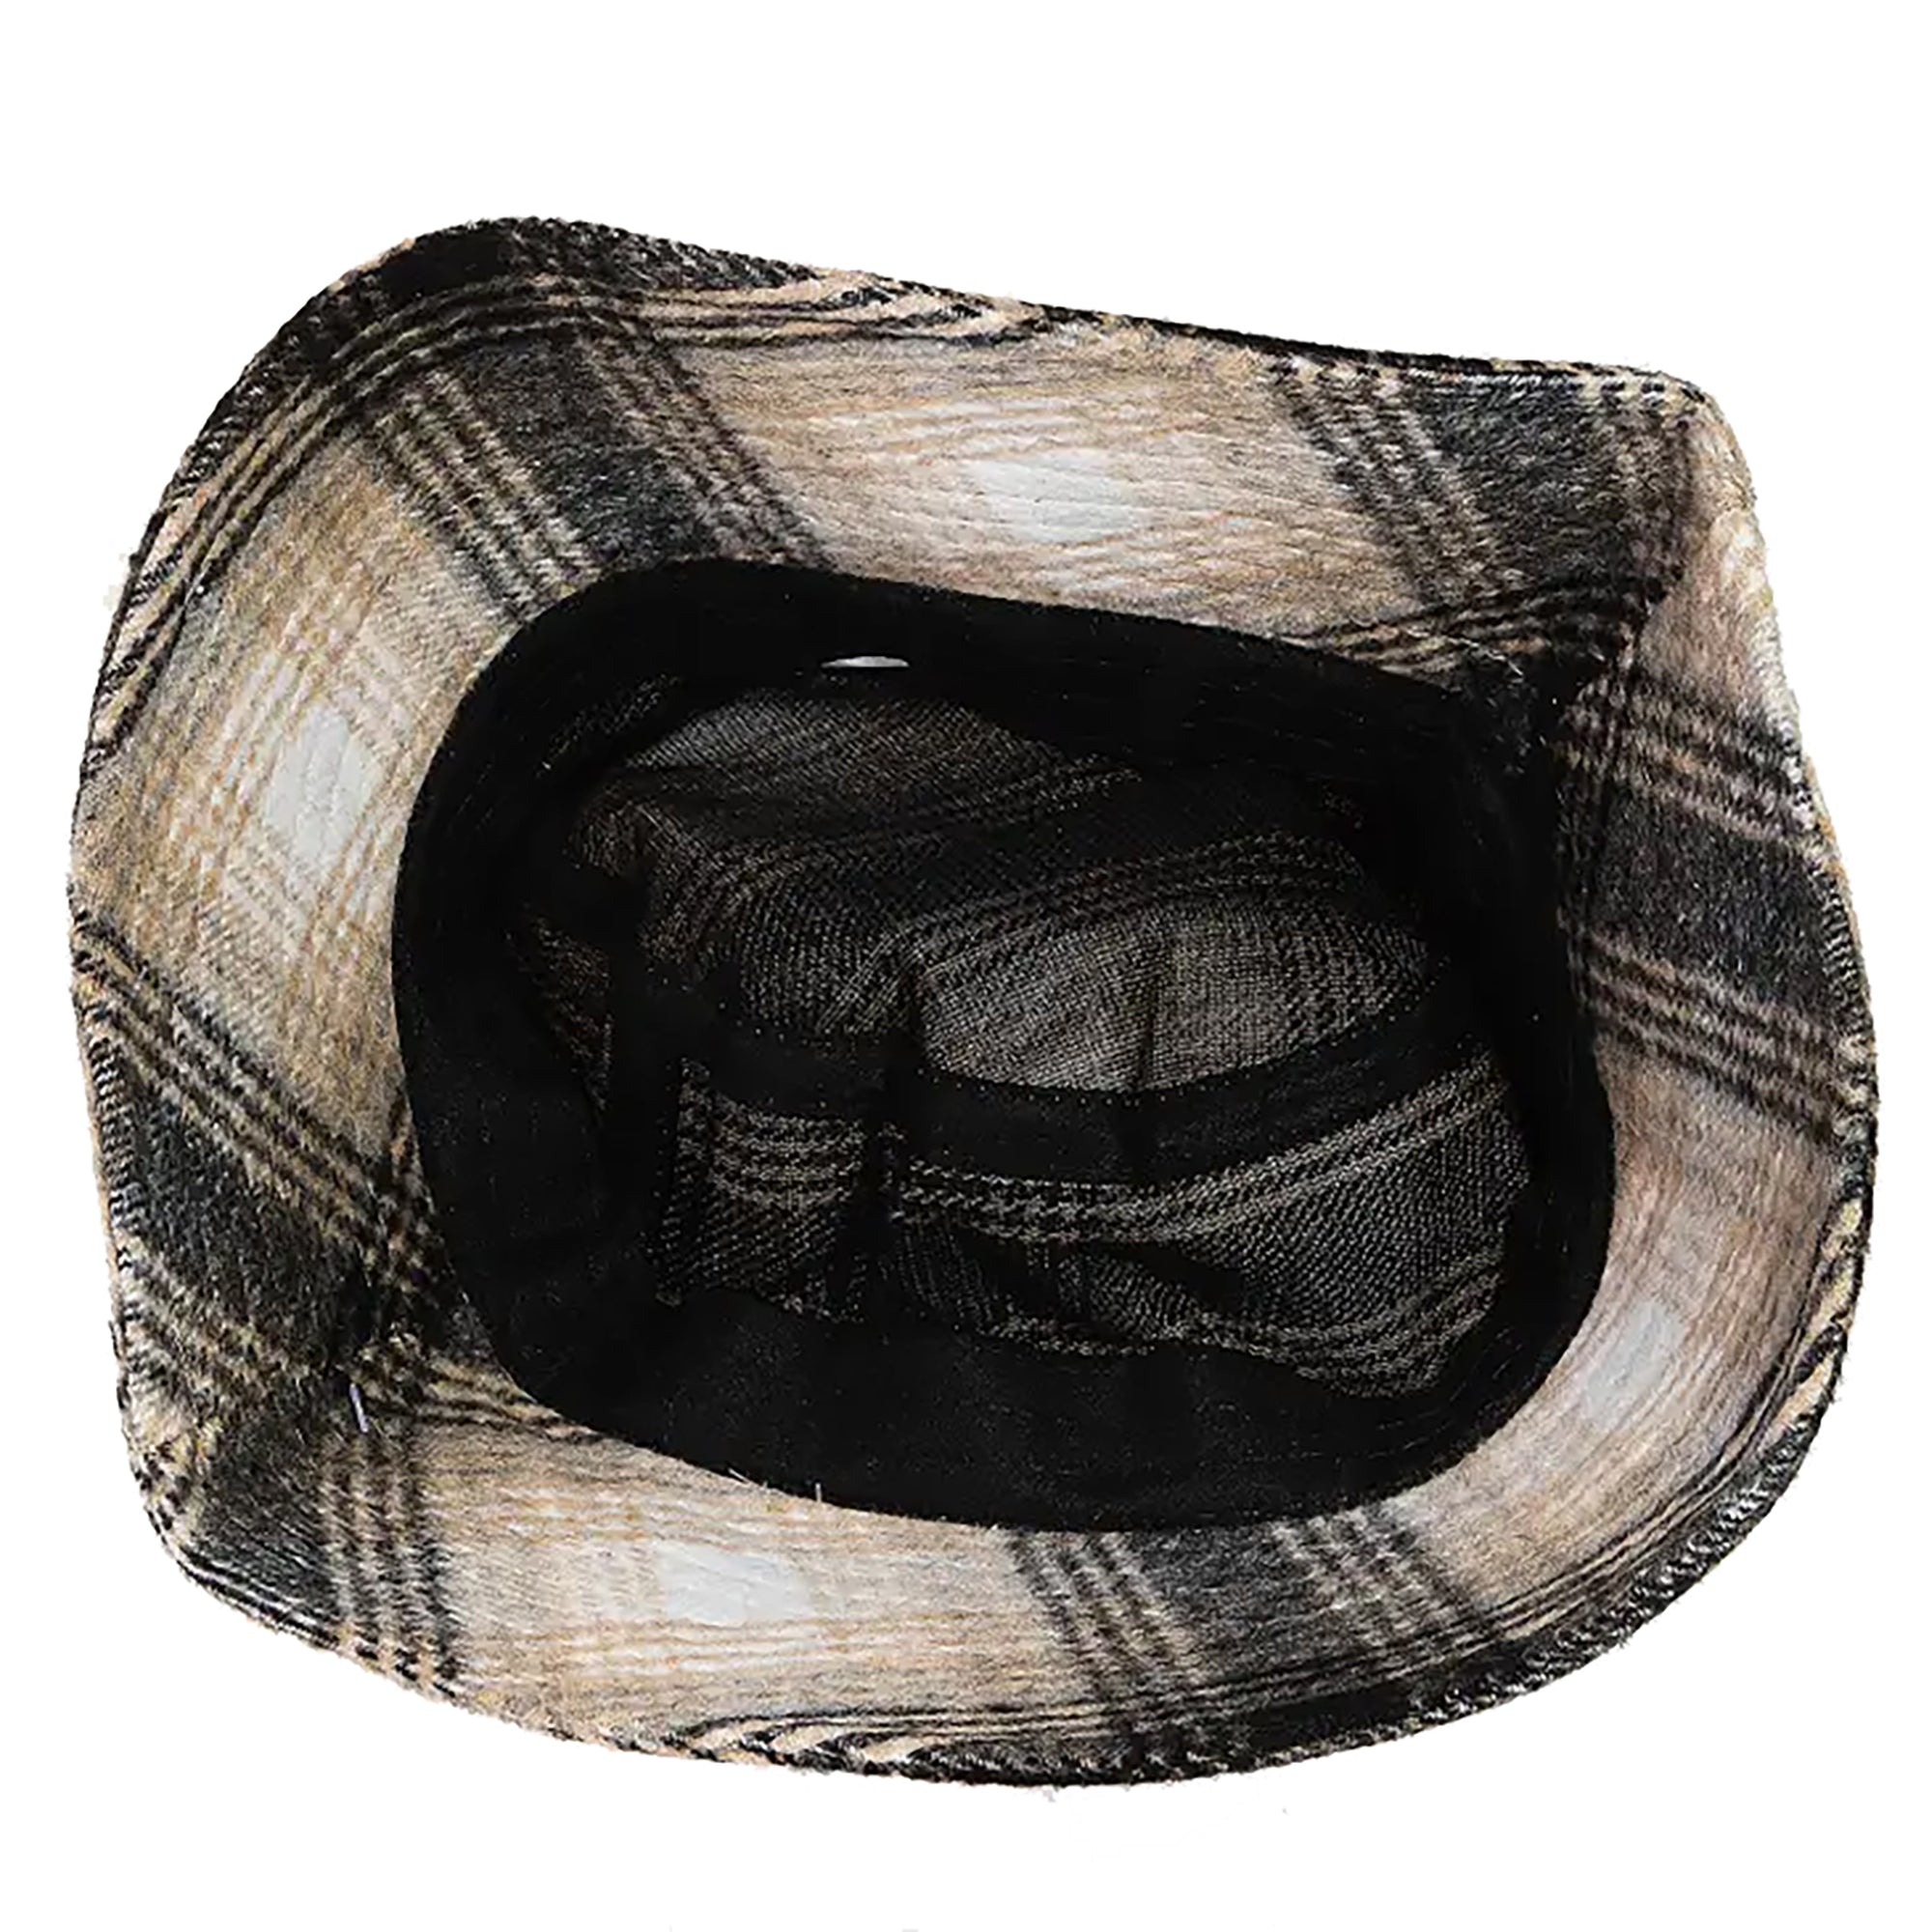 Black and Tan Plaid Pattern Bucket Hat